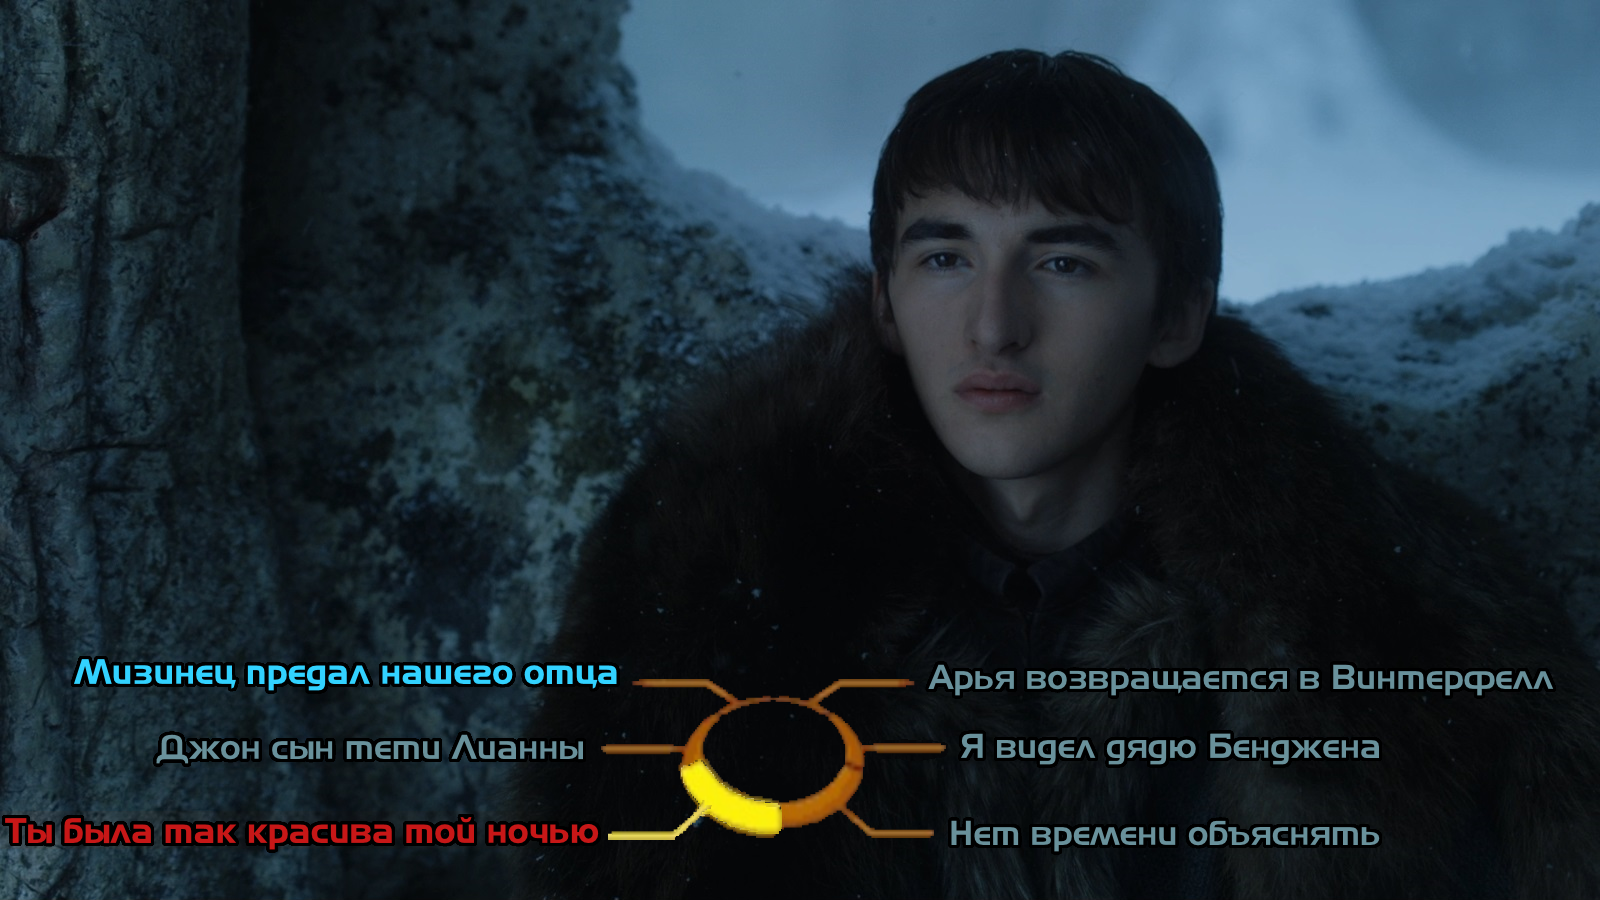 Bran is just playing Renegade - My, Game of Thrones, PLIO, Mass effect, Bran Stark, Serials, Spoiler